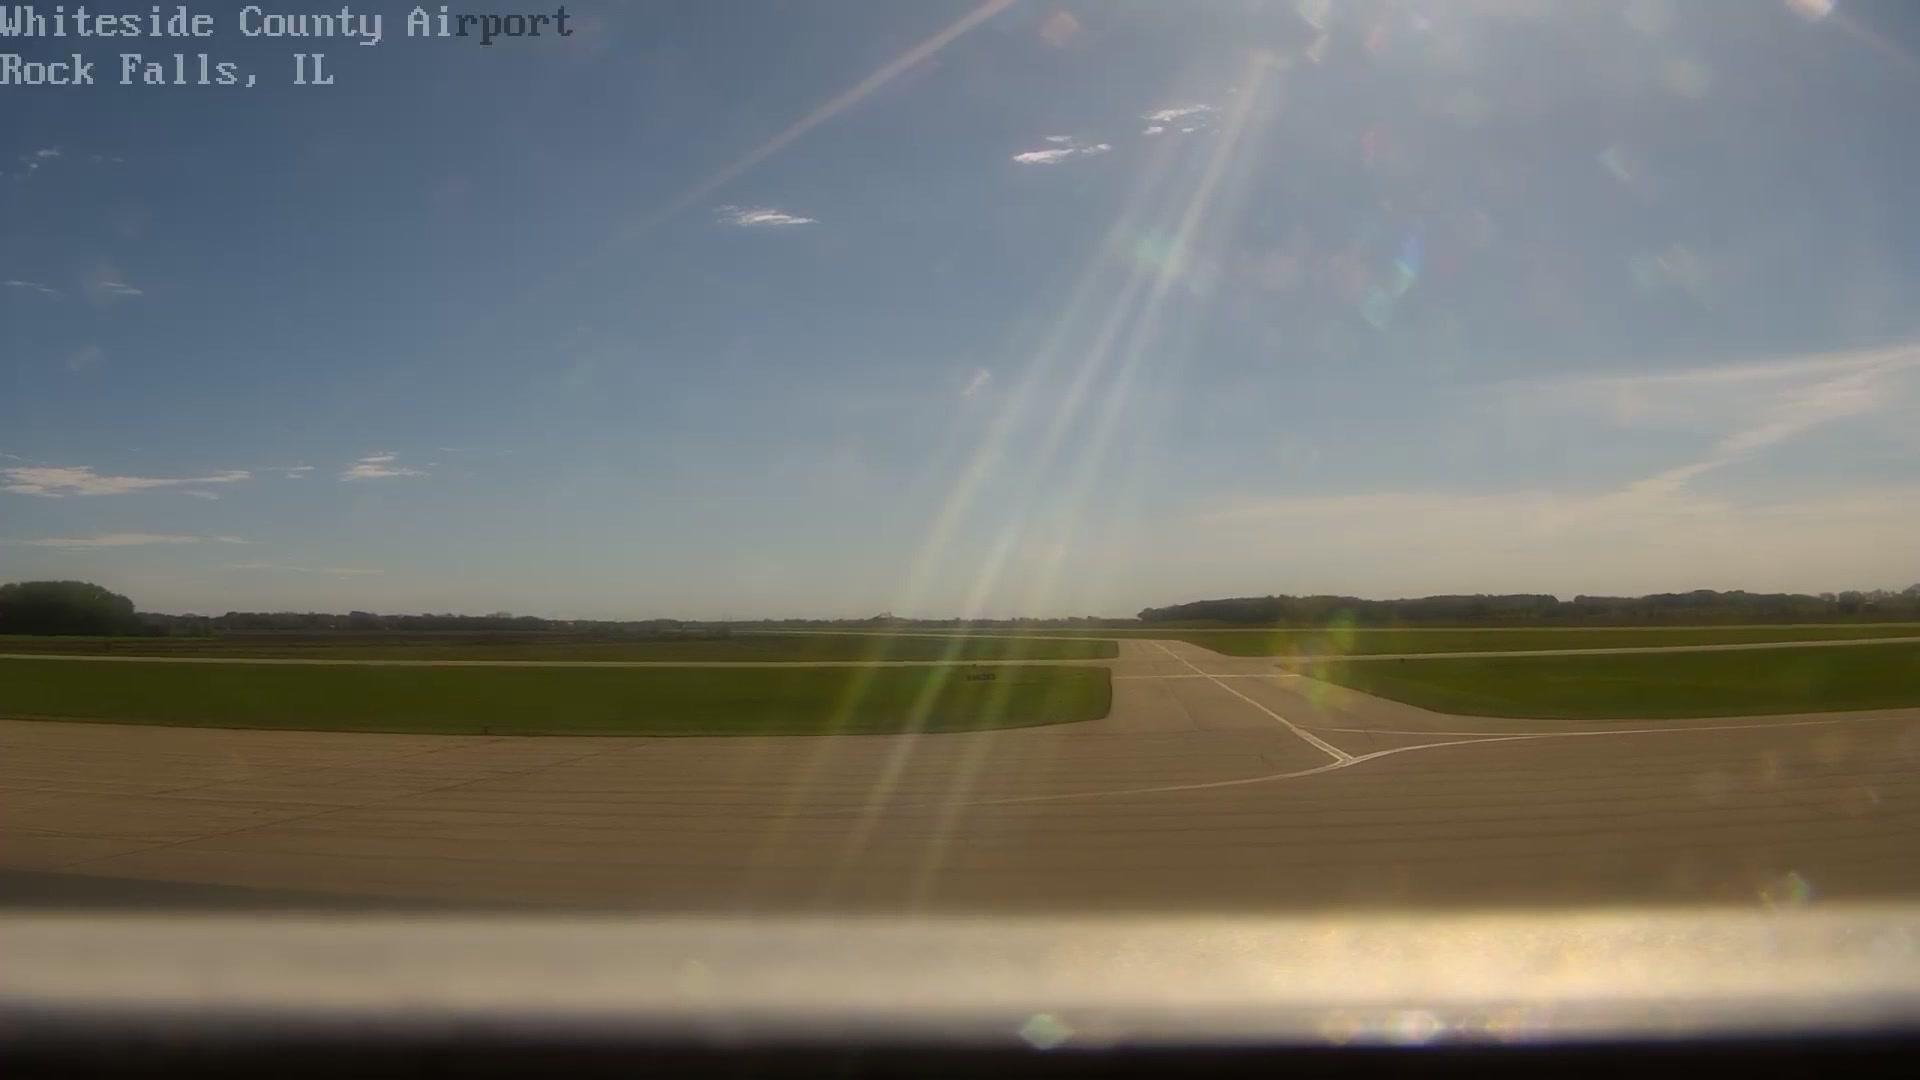 Sterling: Whiteside County Airport - Rock Falls - Illinois Traffic Camera